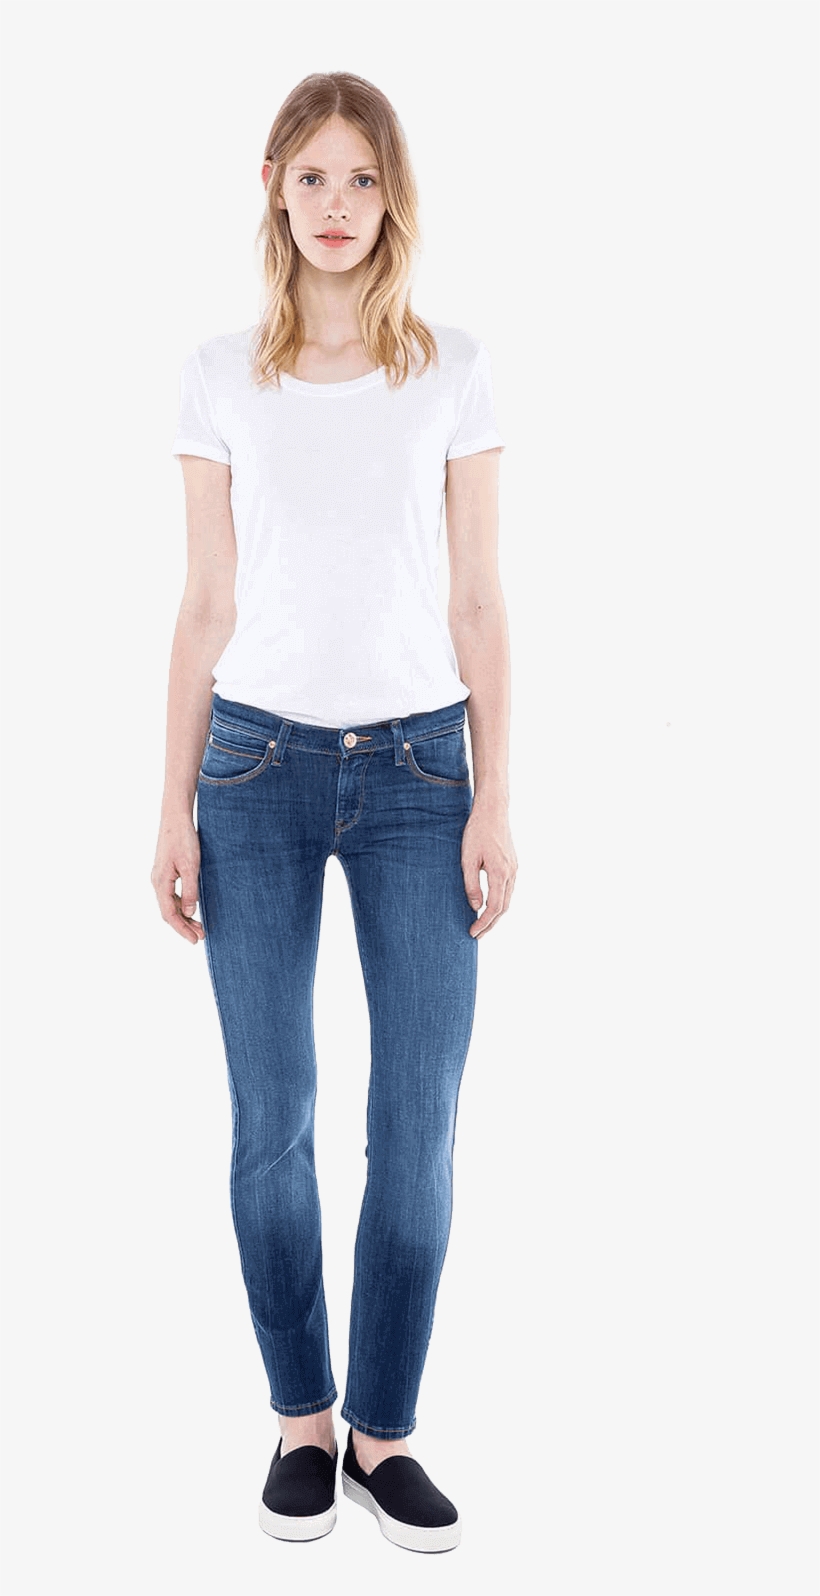 Slim - T Shirt Jeans Woman Png, transparent png #2581696